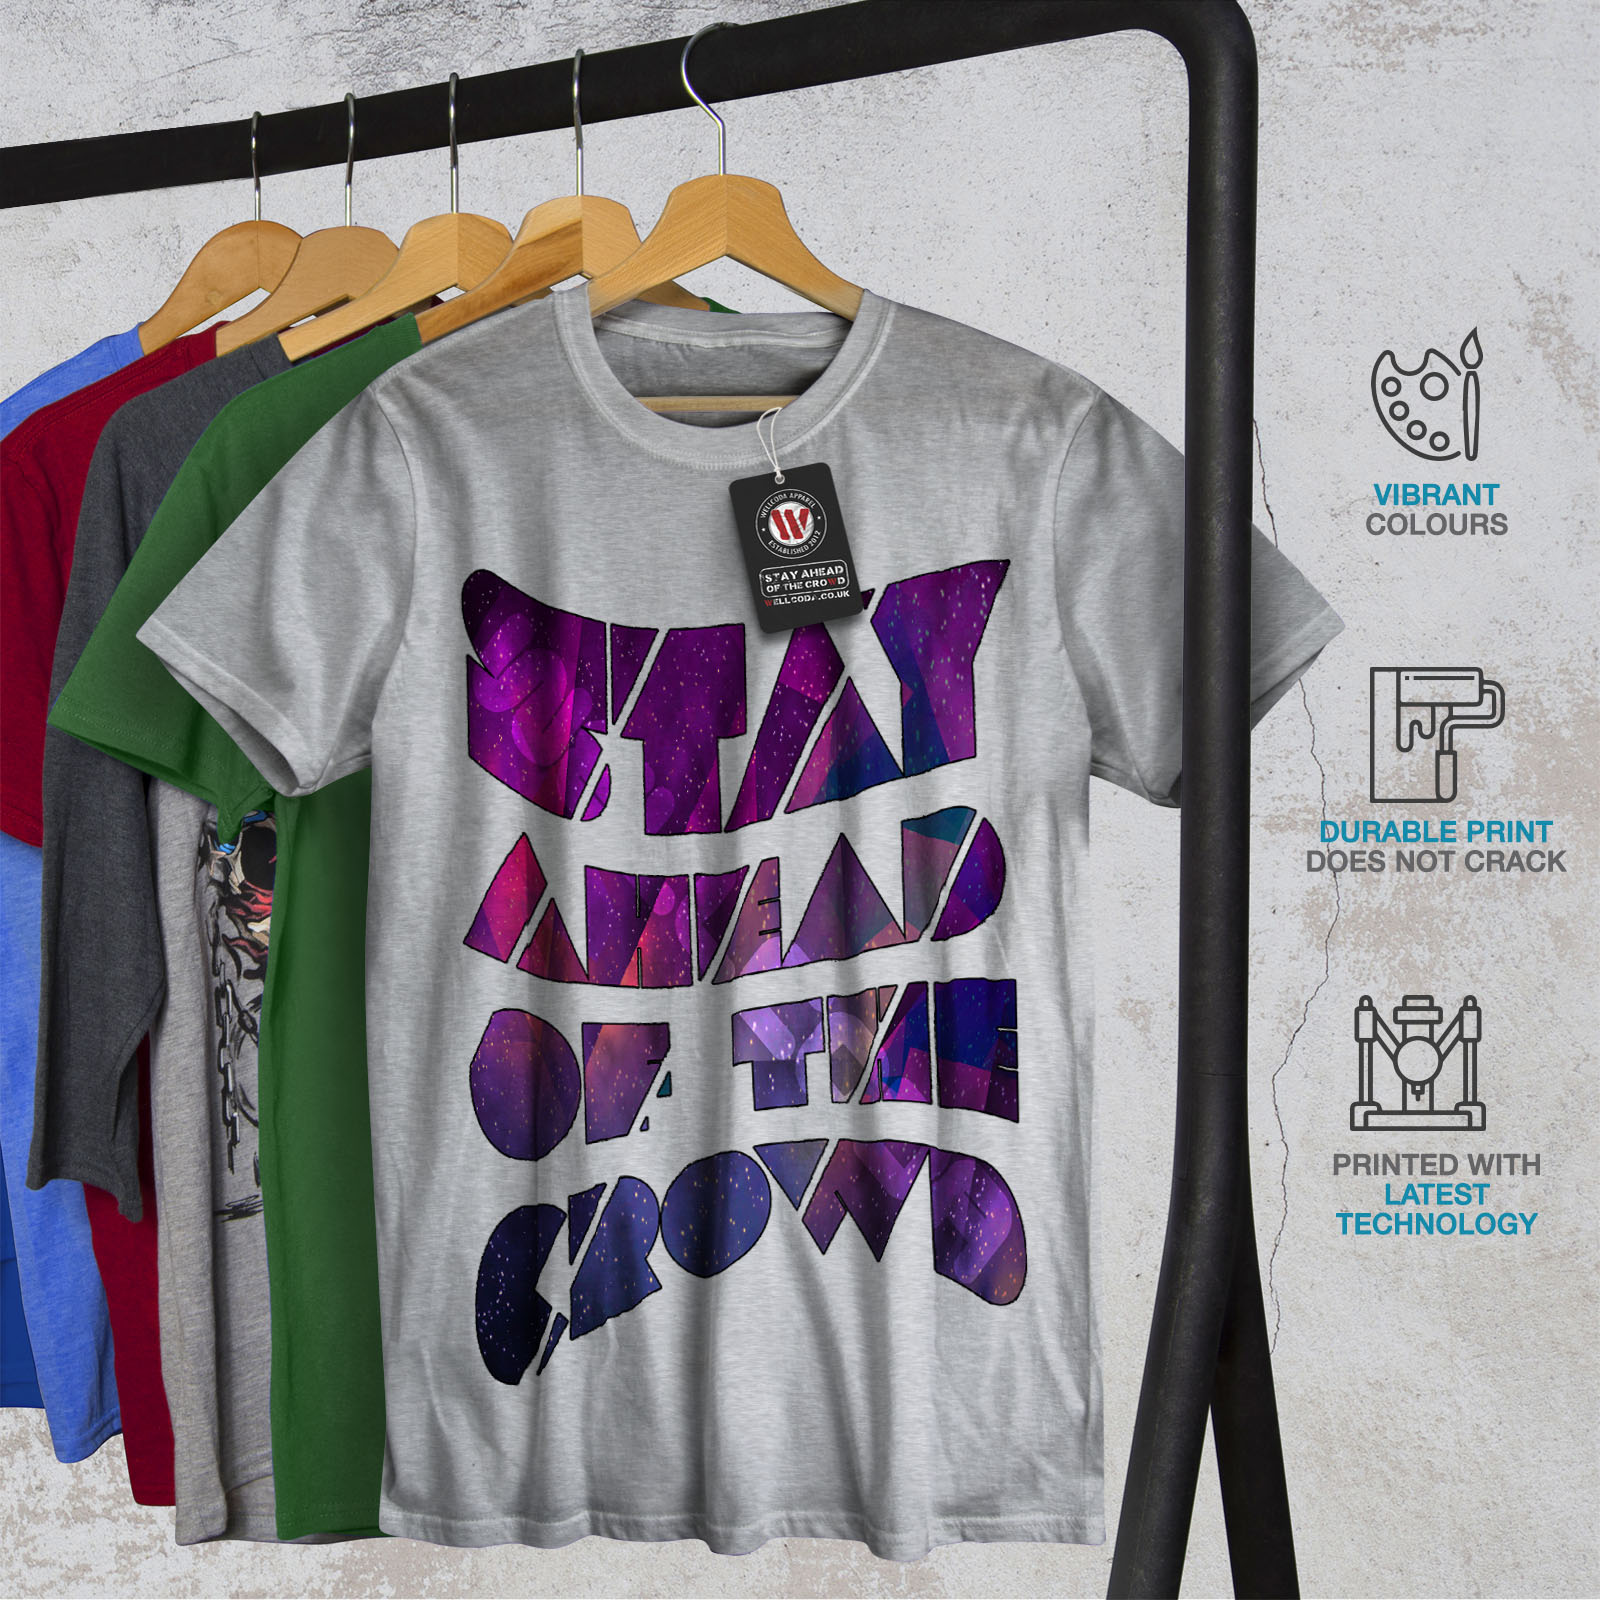 Wellcoda Geometric Unique Mens T-shirt, Attitude Graphic Design Printed Tee | eBay